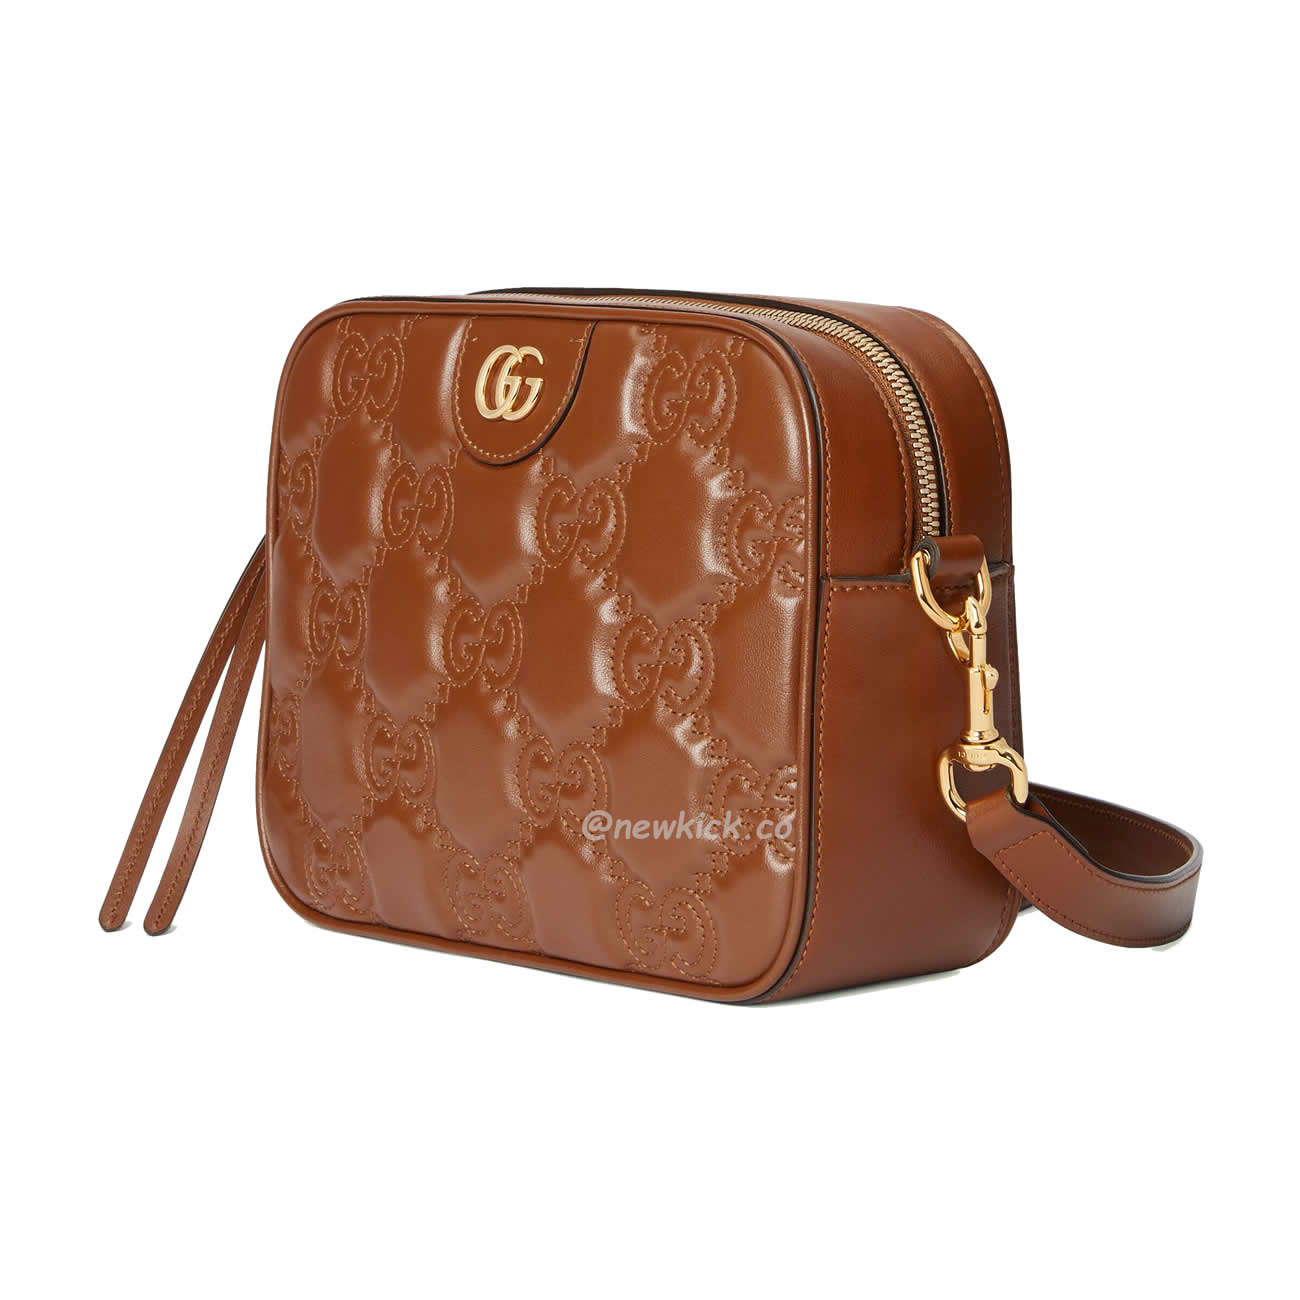 Gucci Gg Matelass Small Bag Product Details 702234 Um8hg 1046 (10) - newkick.org